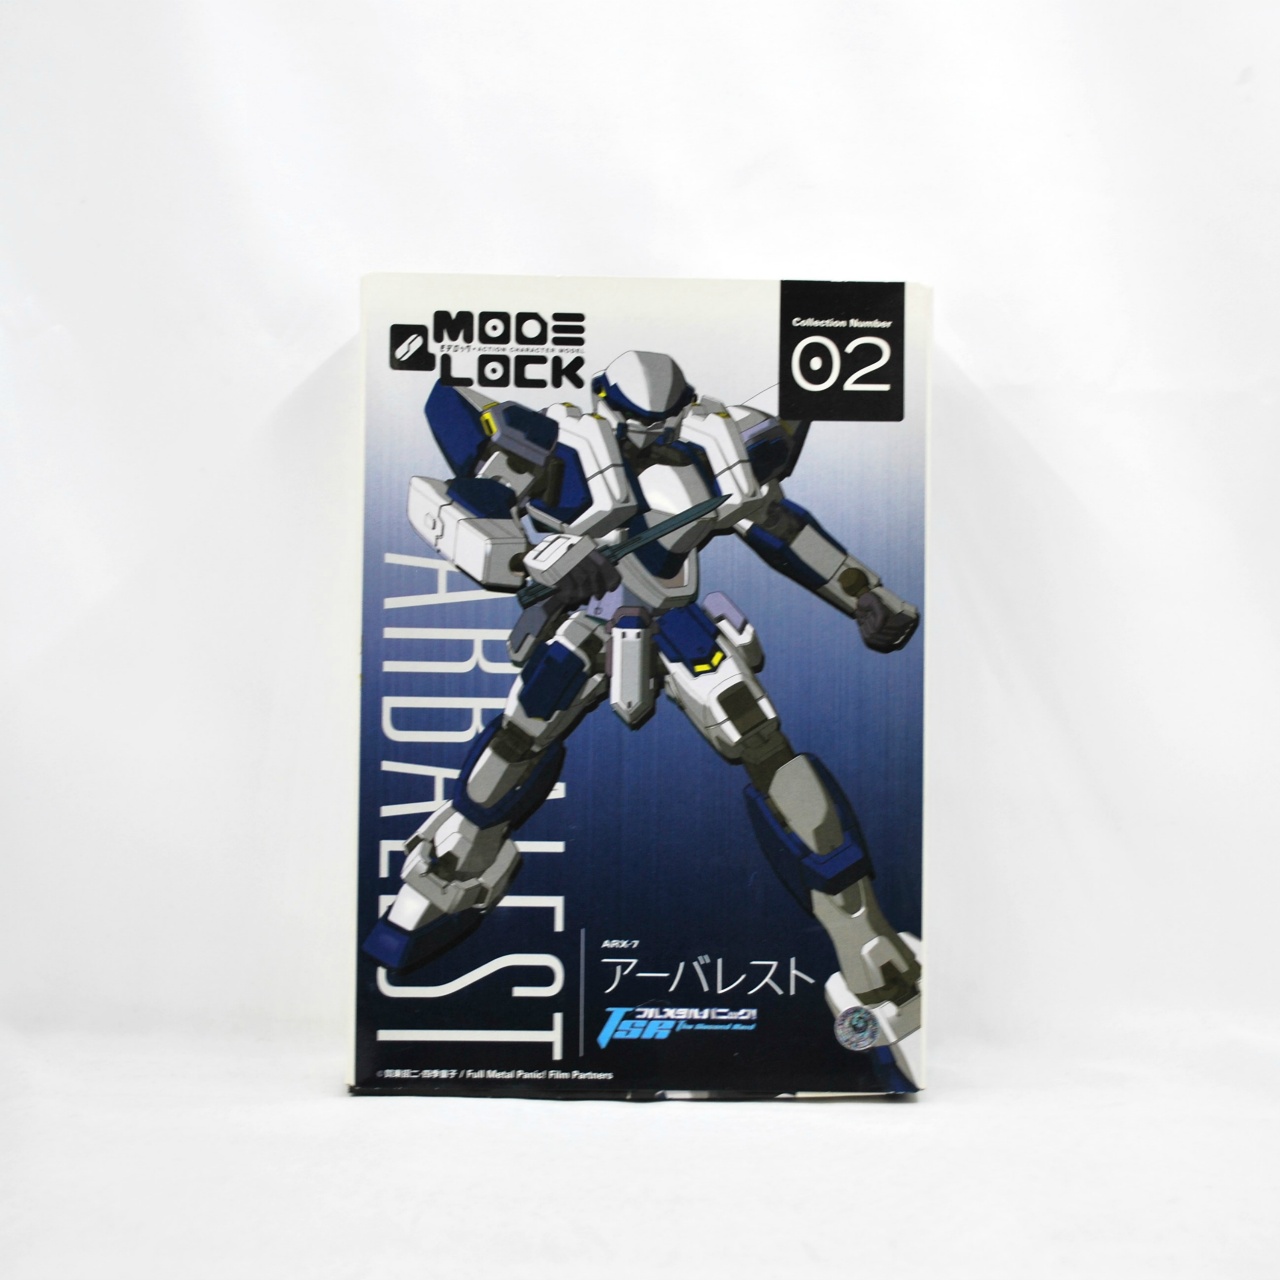 ATELIER -AI (Kotobukiya) Plastic Model Modelock 02 ARX-7 Arbalest Full Metal Panic TSR